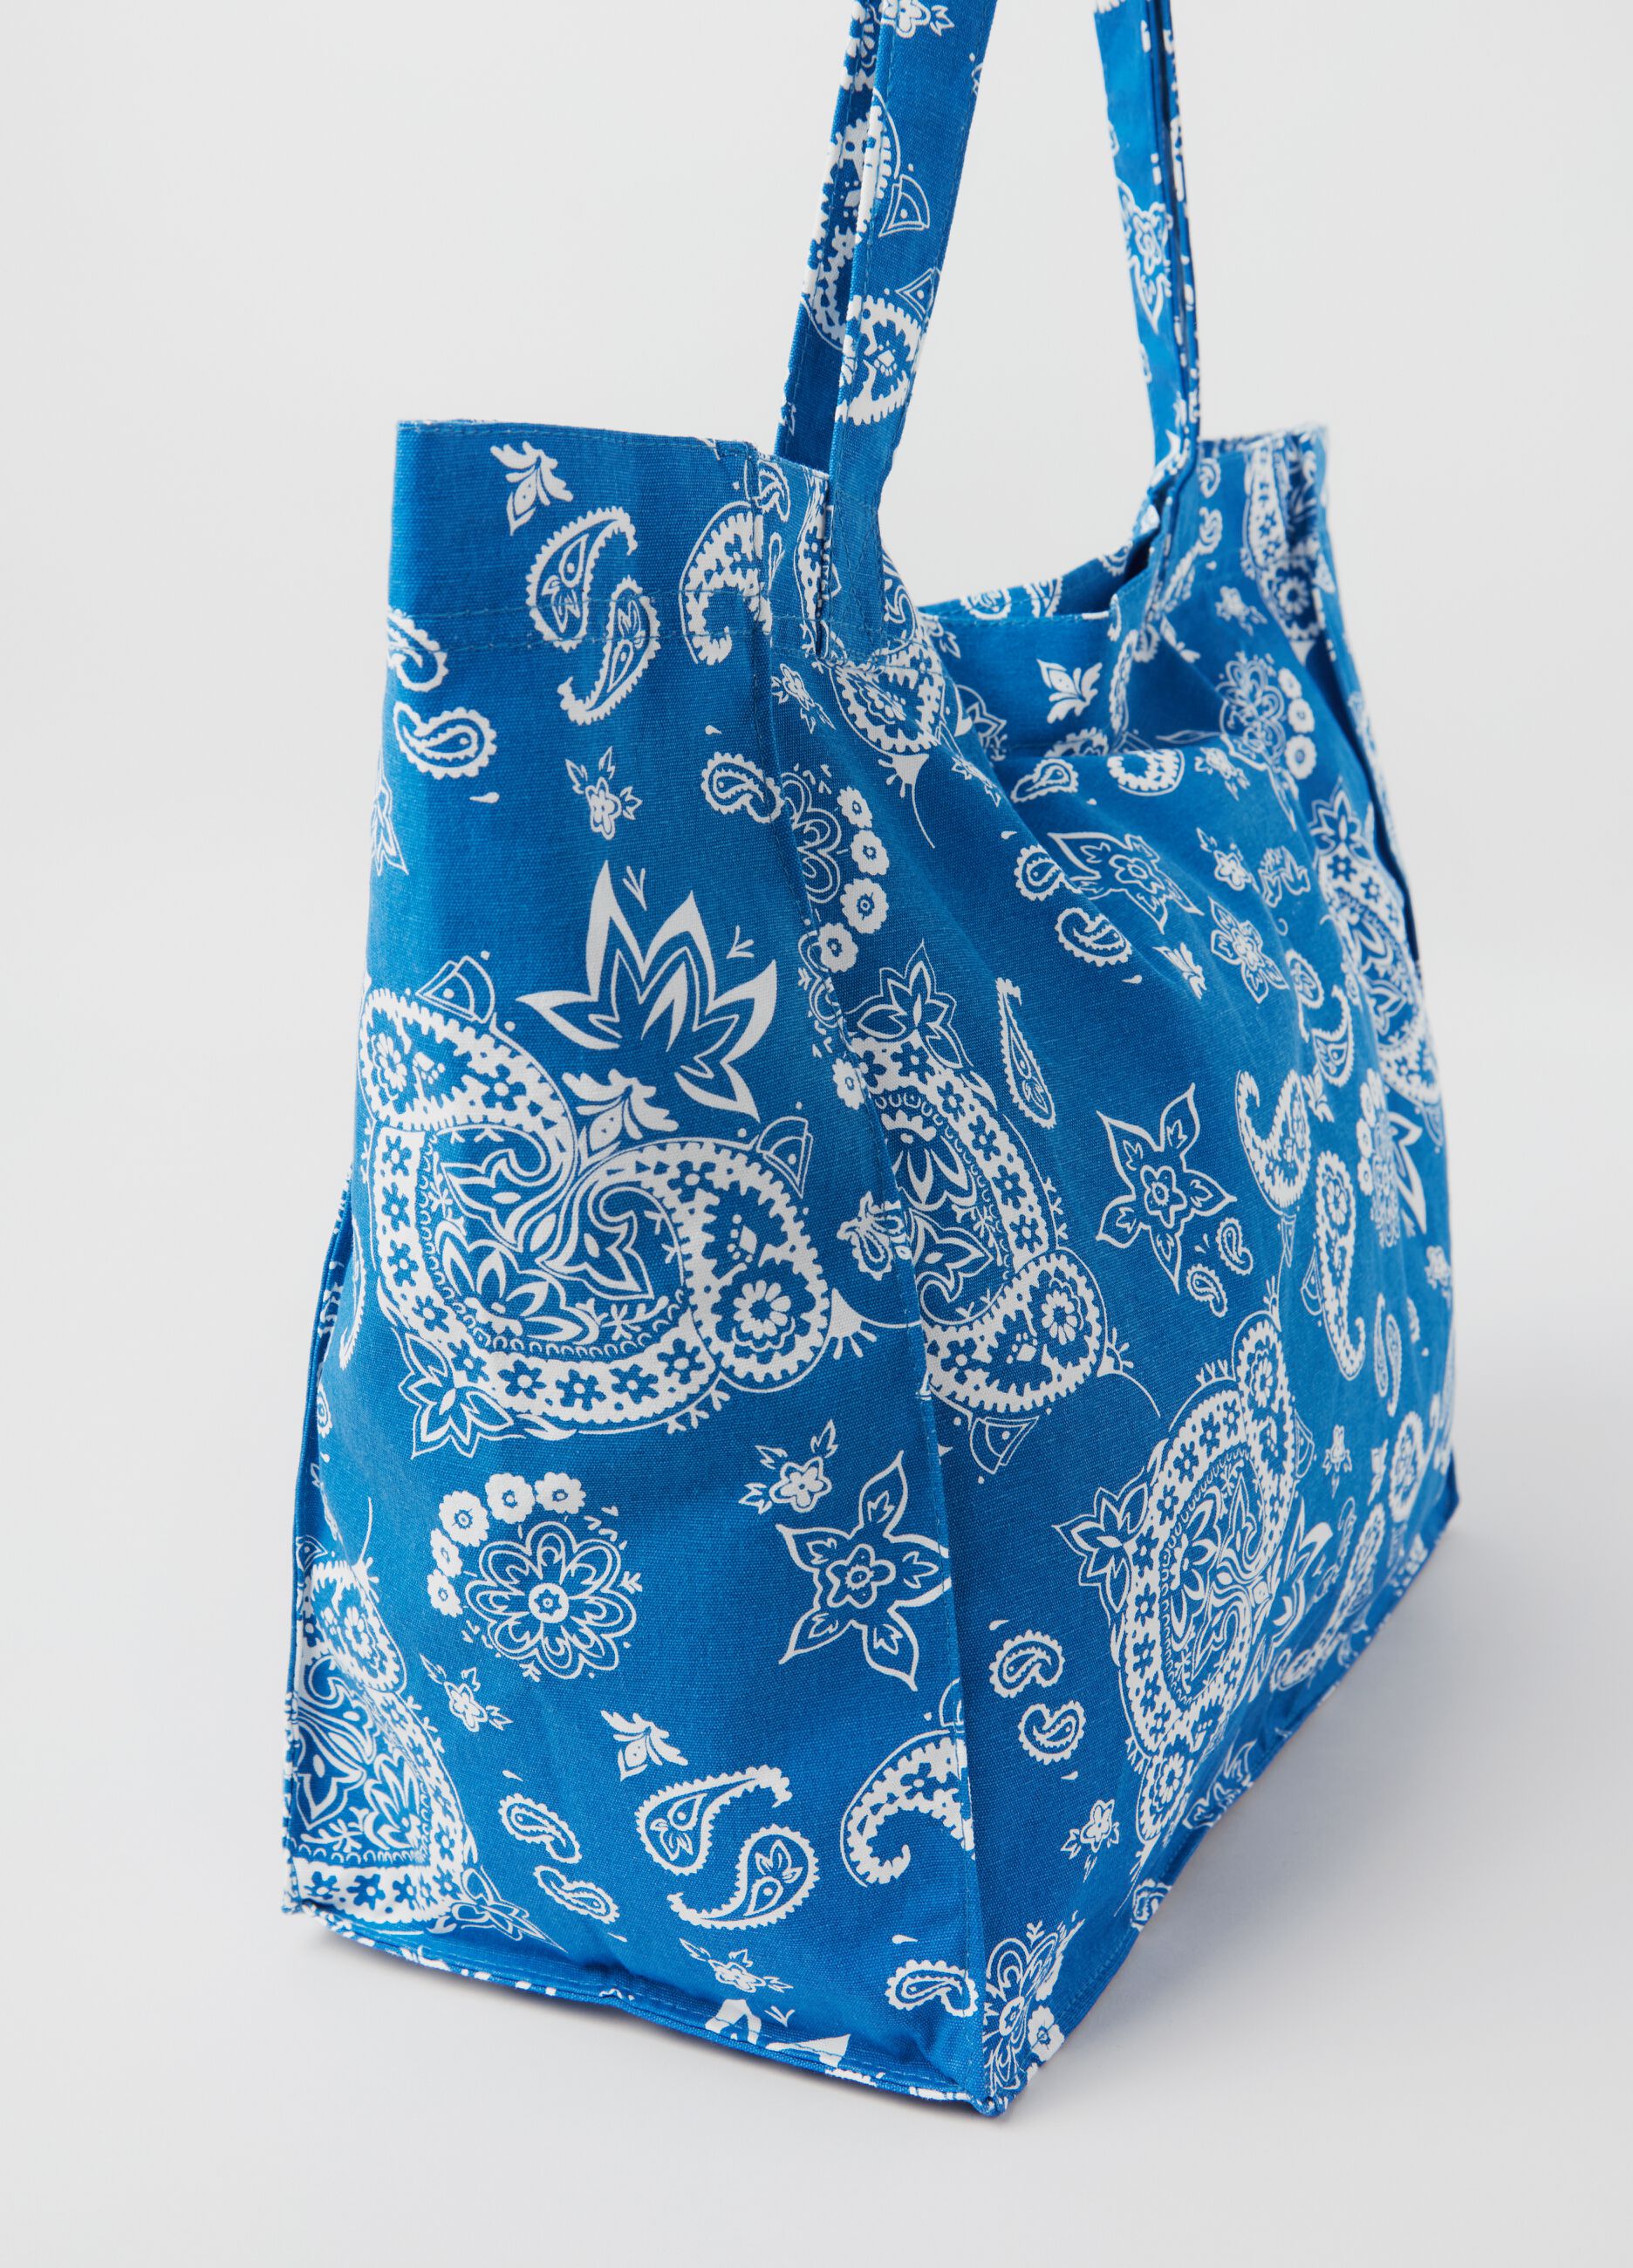 Beach bag with bandana print